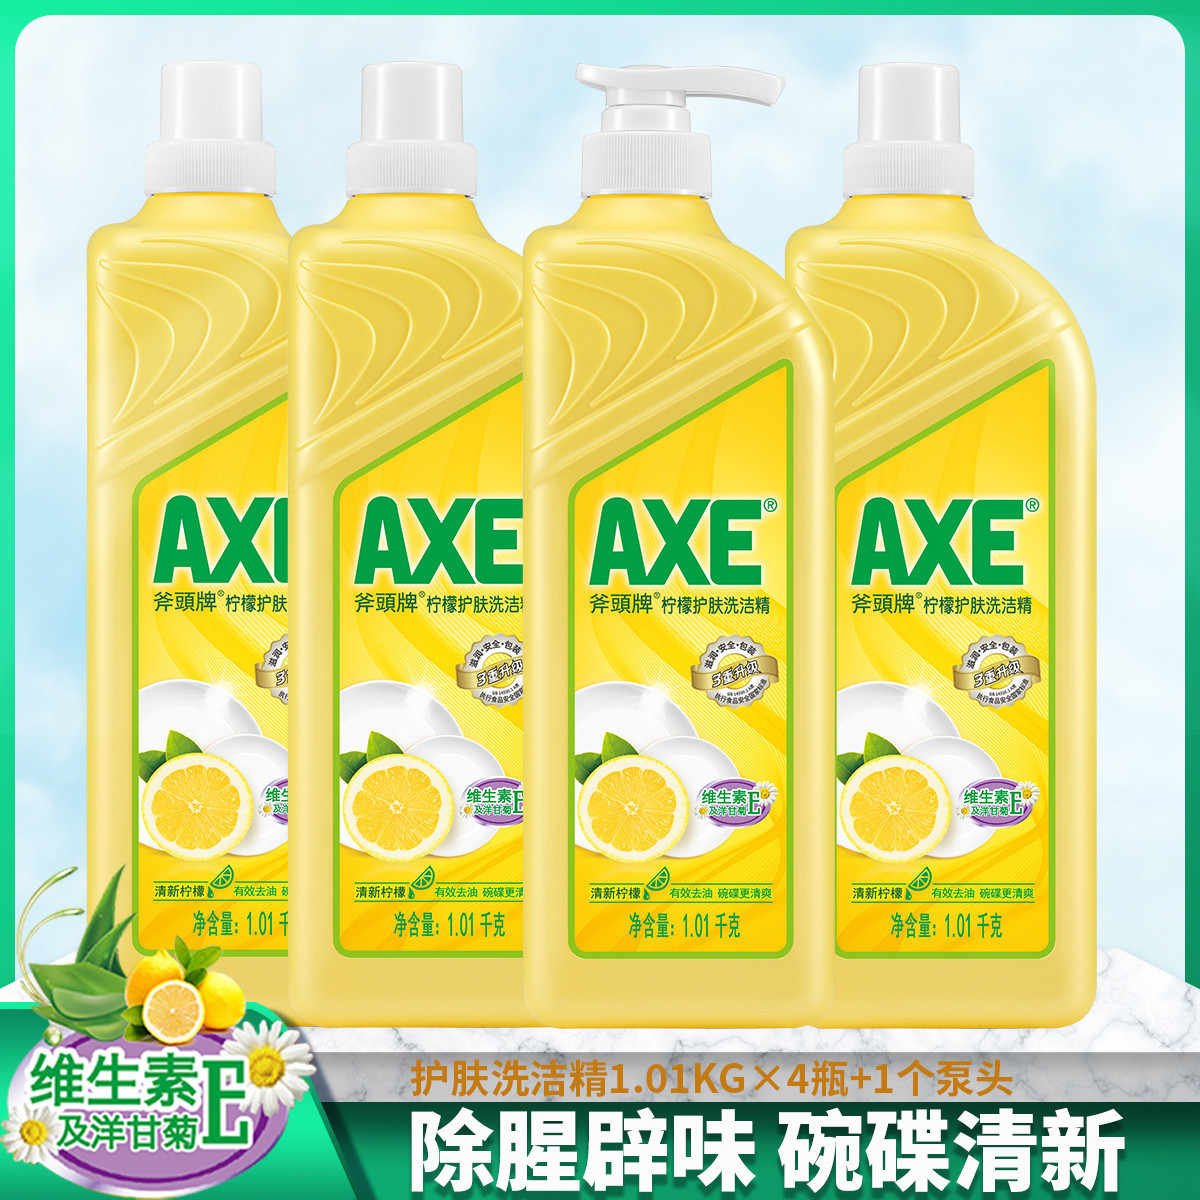 AXE 斧头 牌洗洁精4瓶家庭装家用食品级清洁剂